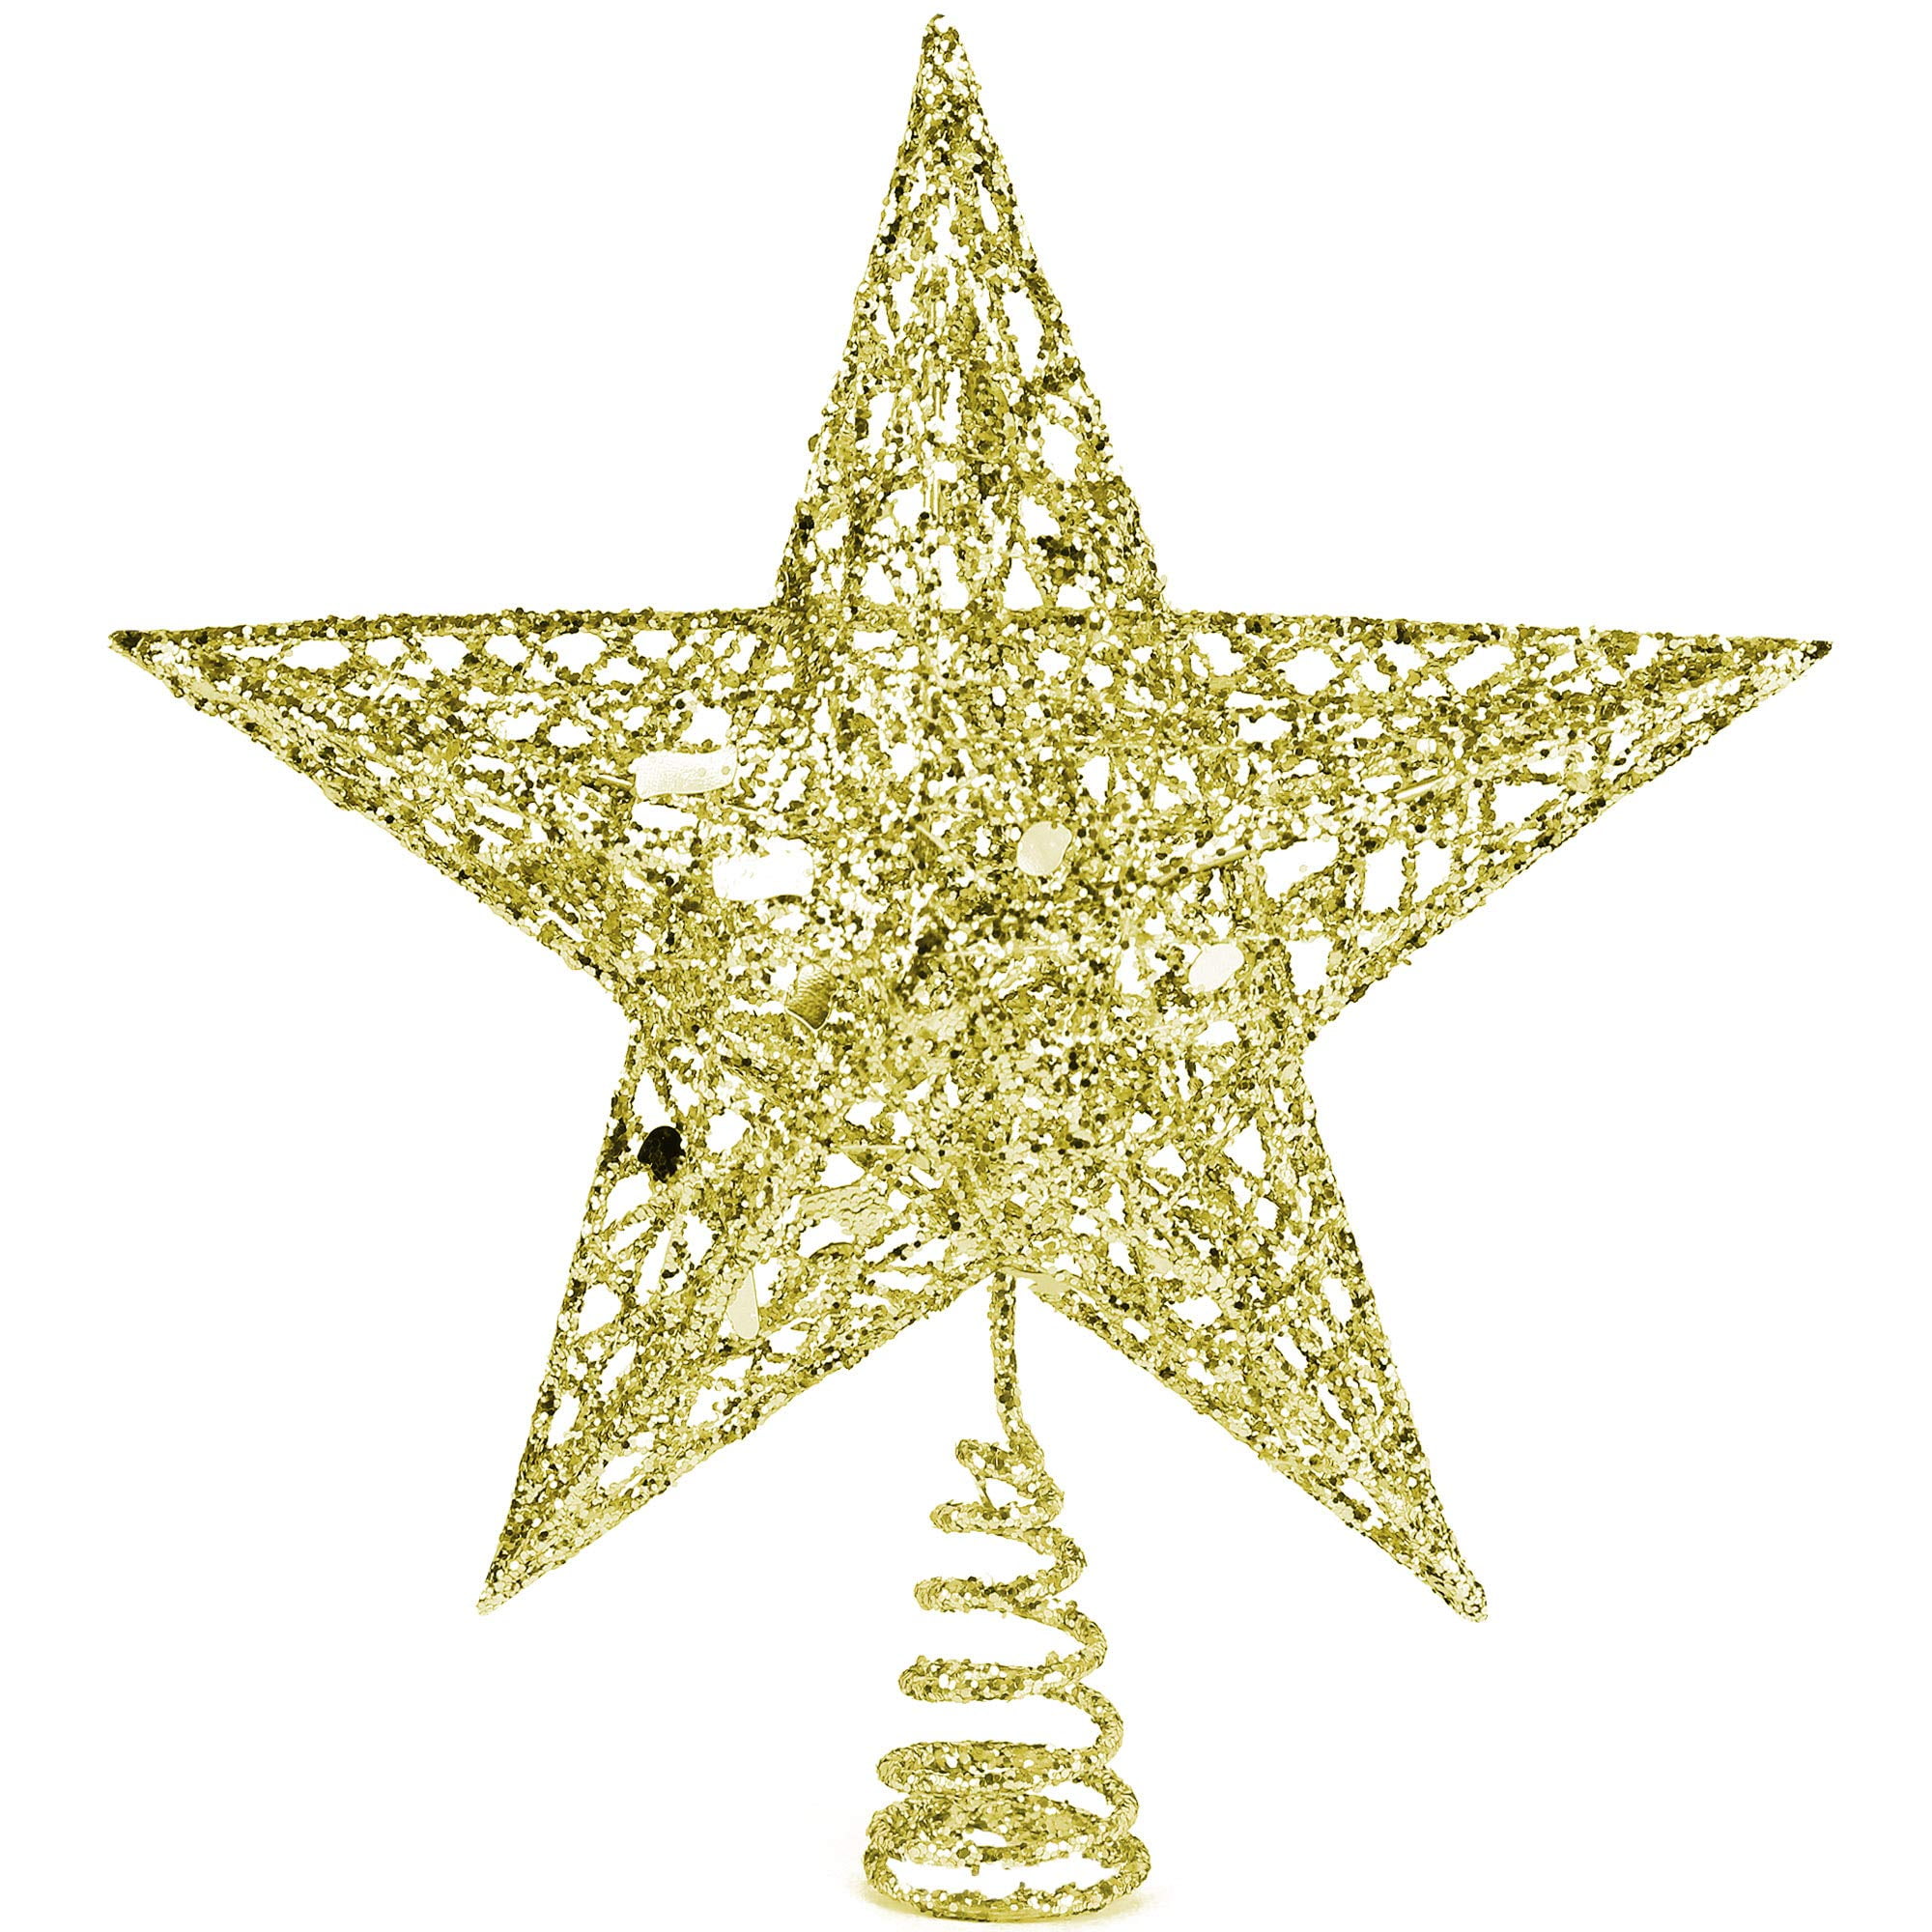 Gemini_mall 20cm Gold Glitter Star Christmas Tree Topper Decoration Ornament Xmas Gifts Gold 10 cm 